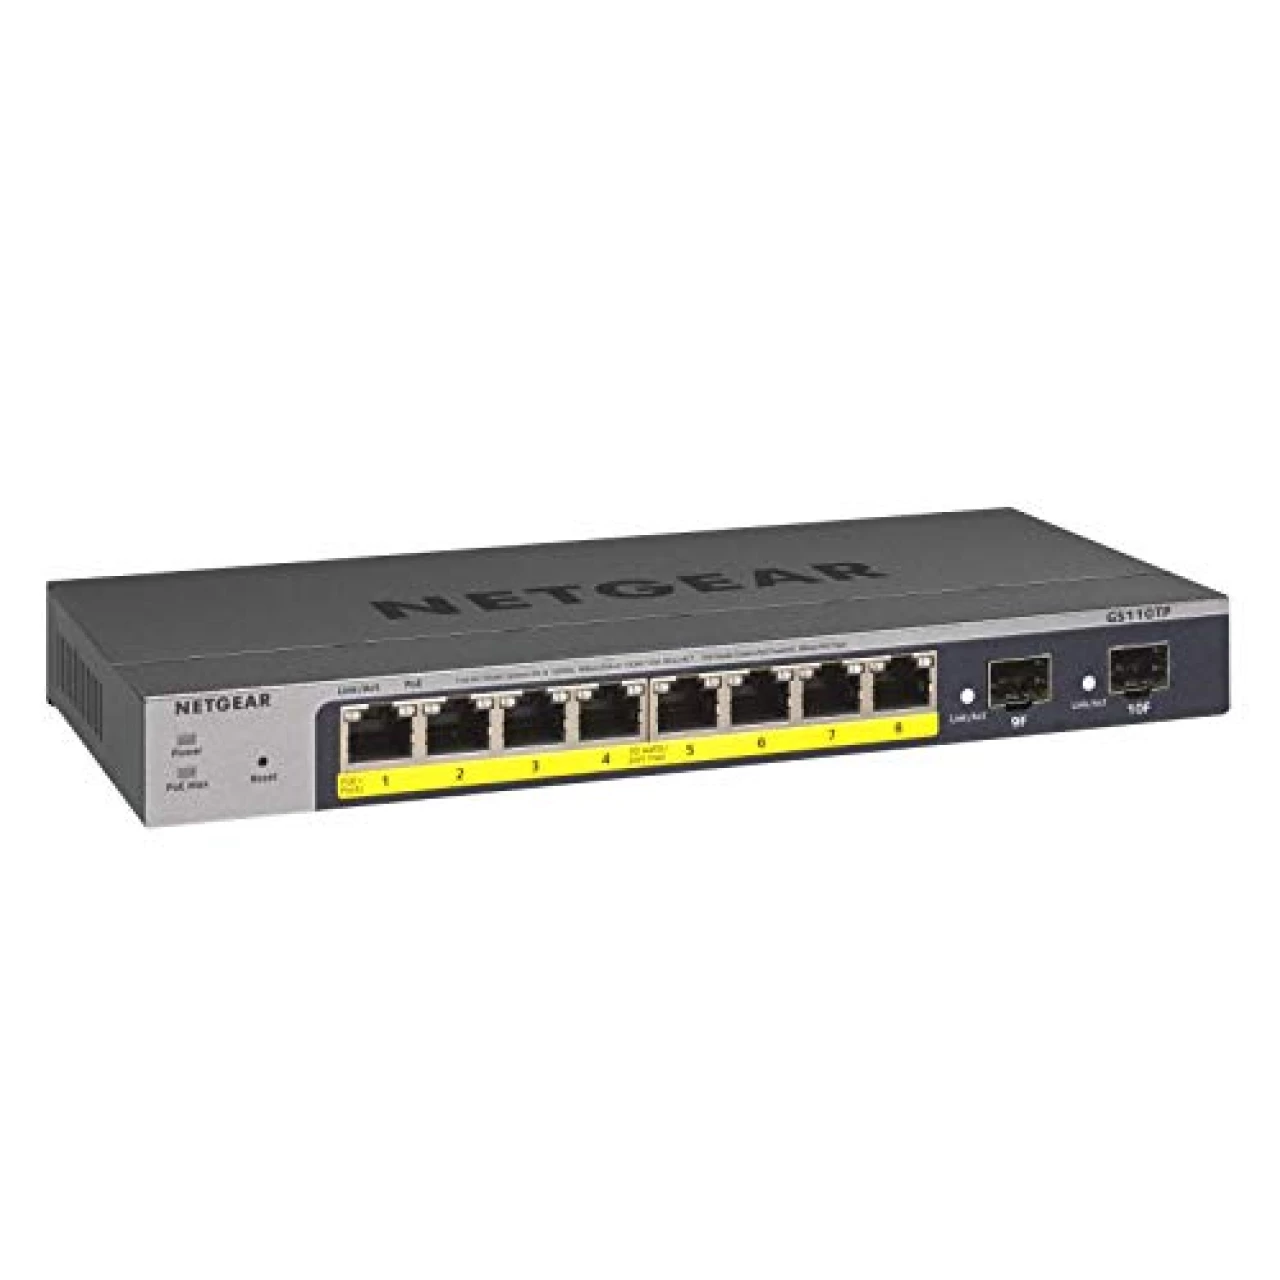 NETGEAR 8-Port PoE Gigabit Ethernet Smart Switch (GS110TP) - Managed with 8 x PoE+ @ 55W, 2 x 1G SFP, Desktop,Black